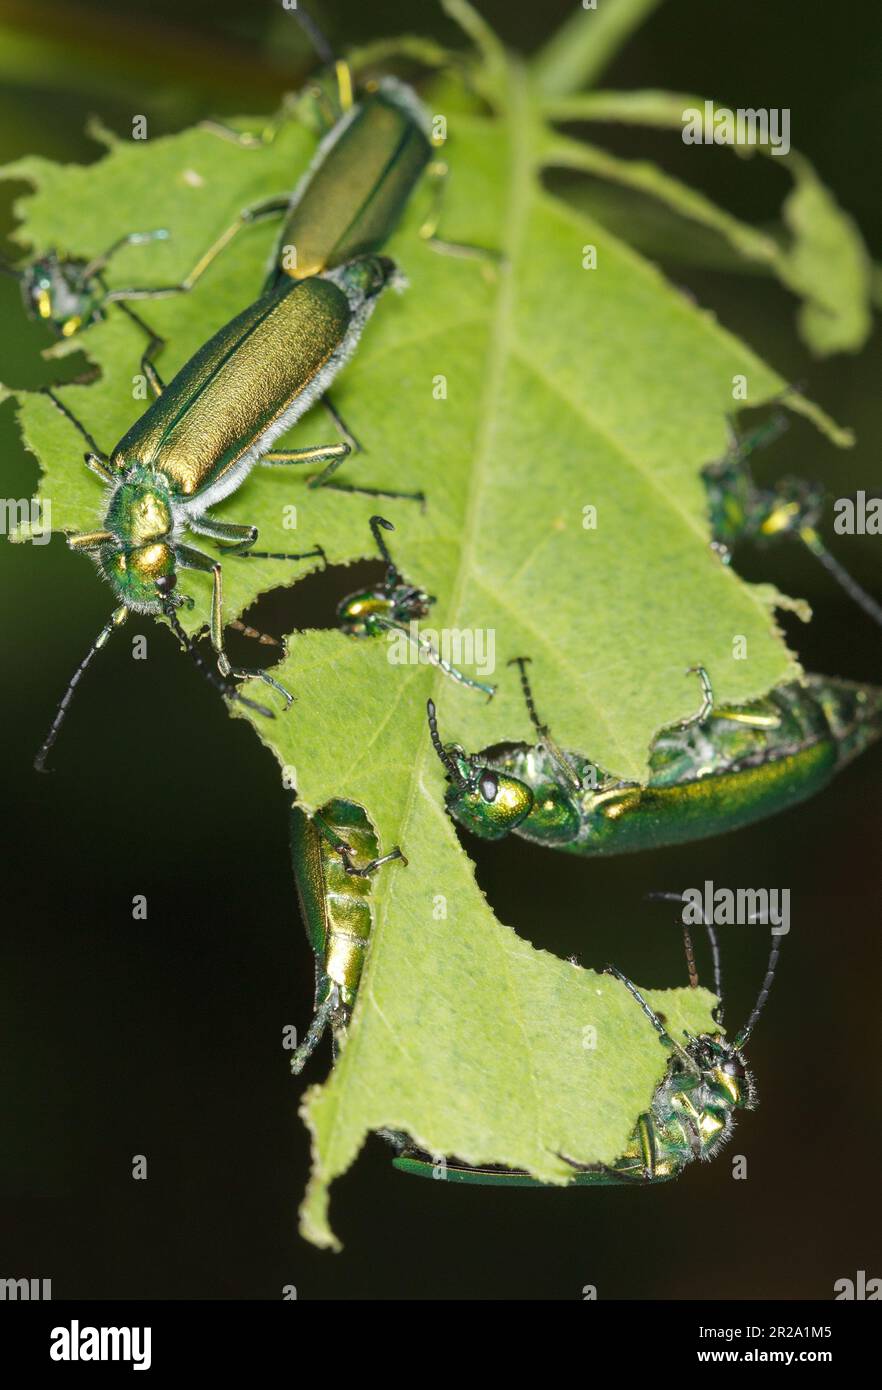 Spanish fly (Lytta vesicatoria) feeding a leaf. Green beetles eating a leaf. Stock Photo